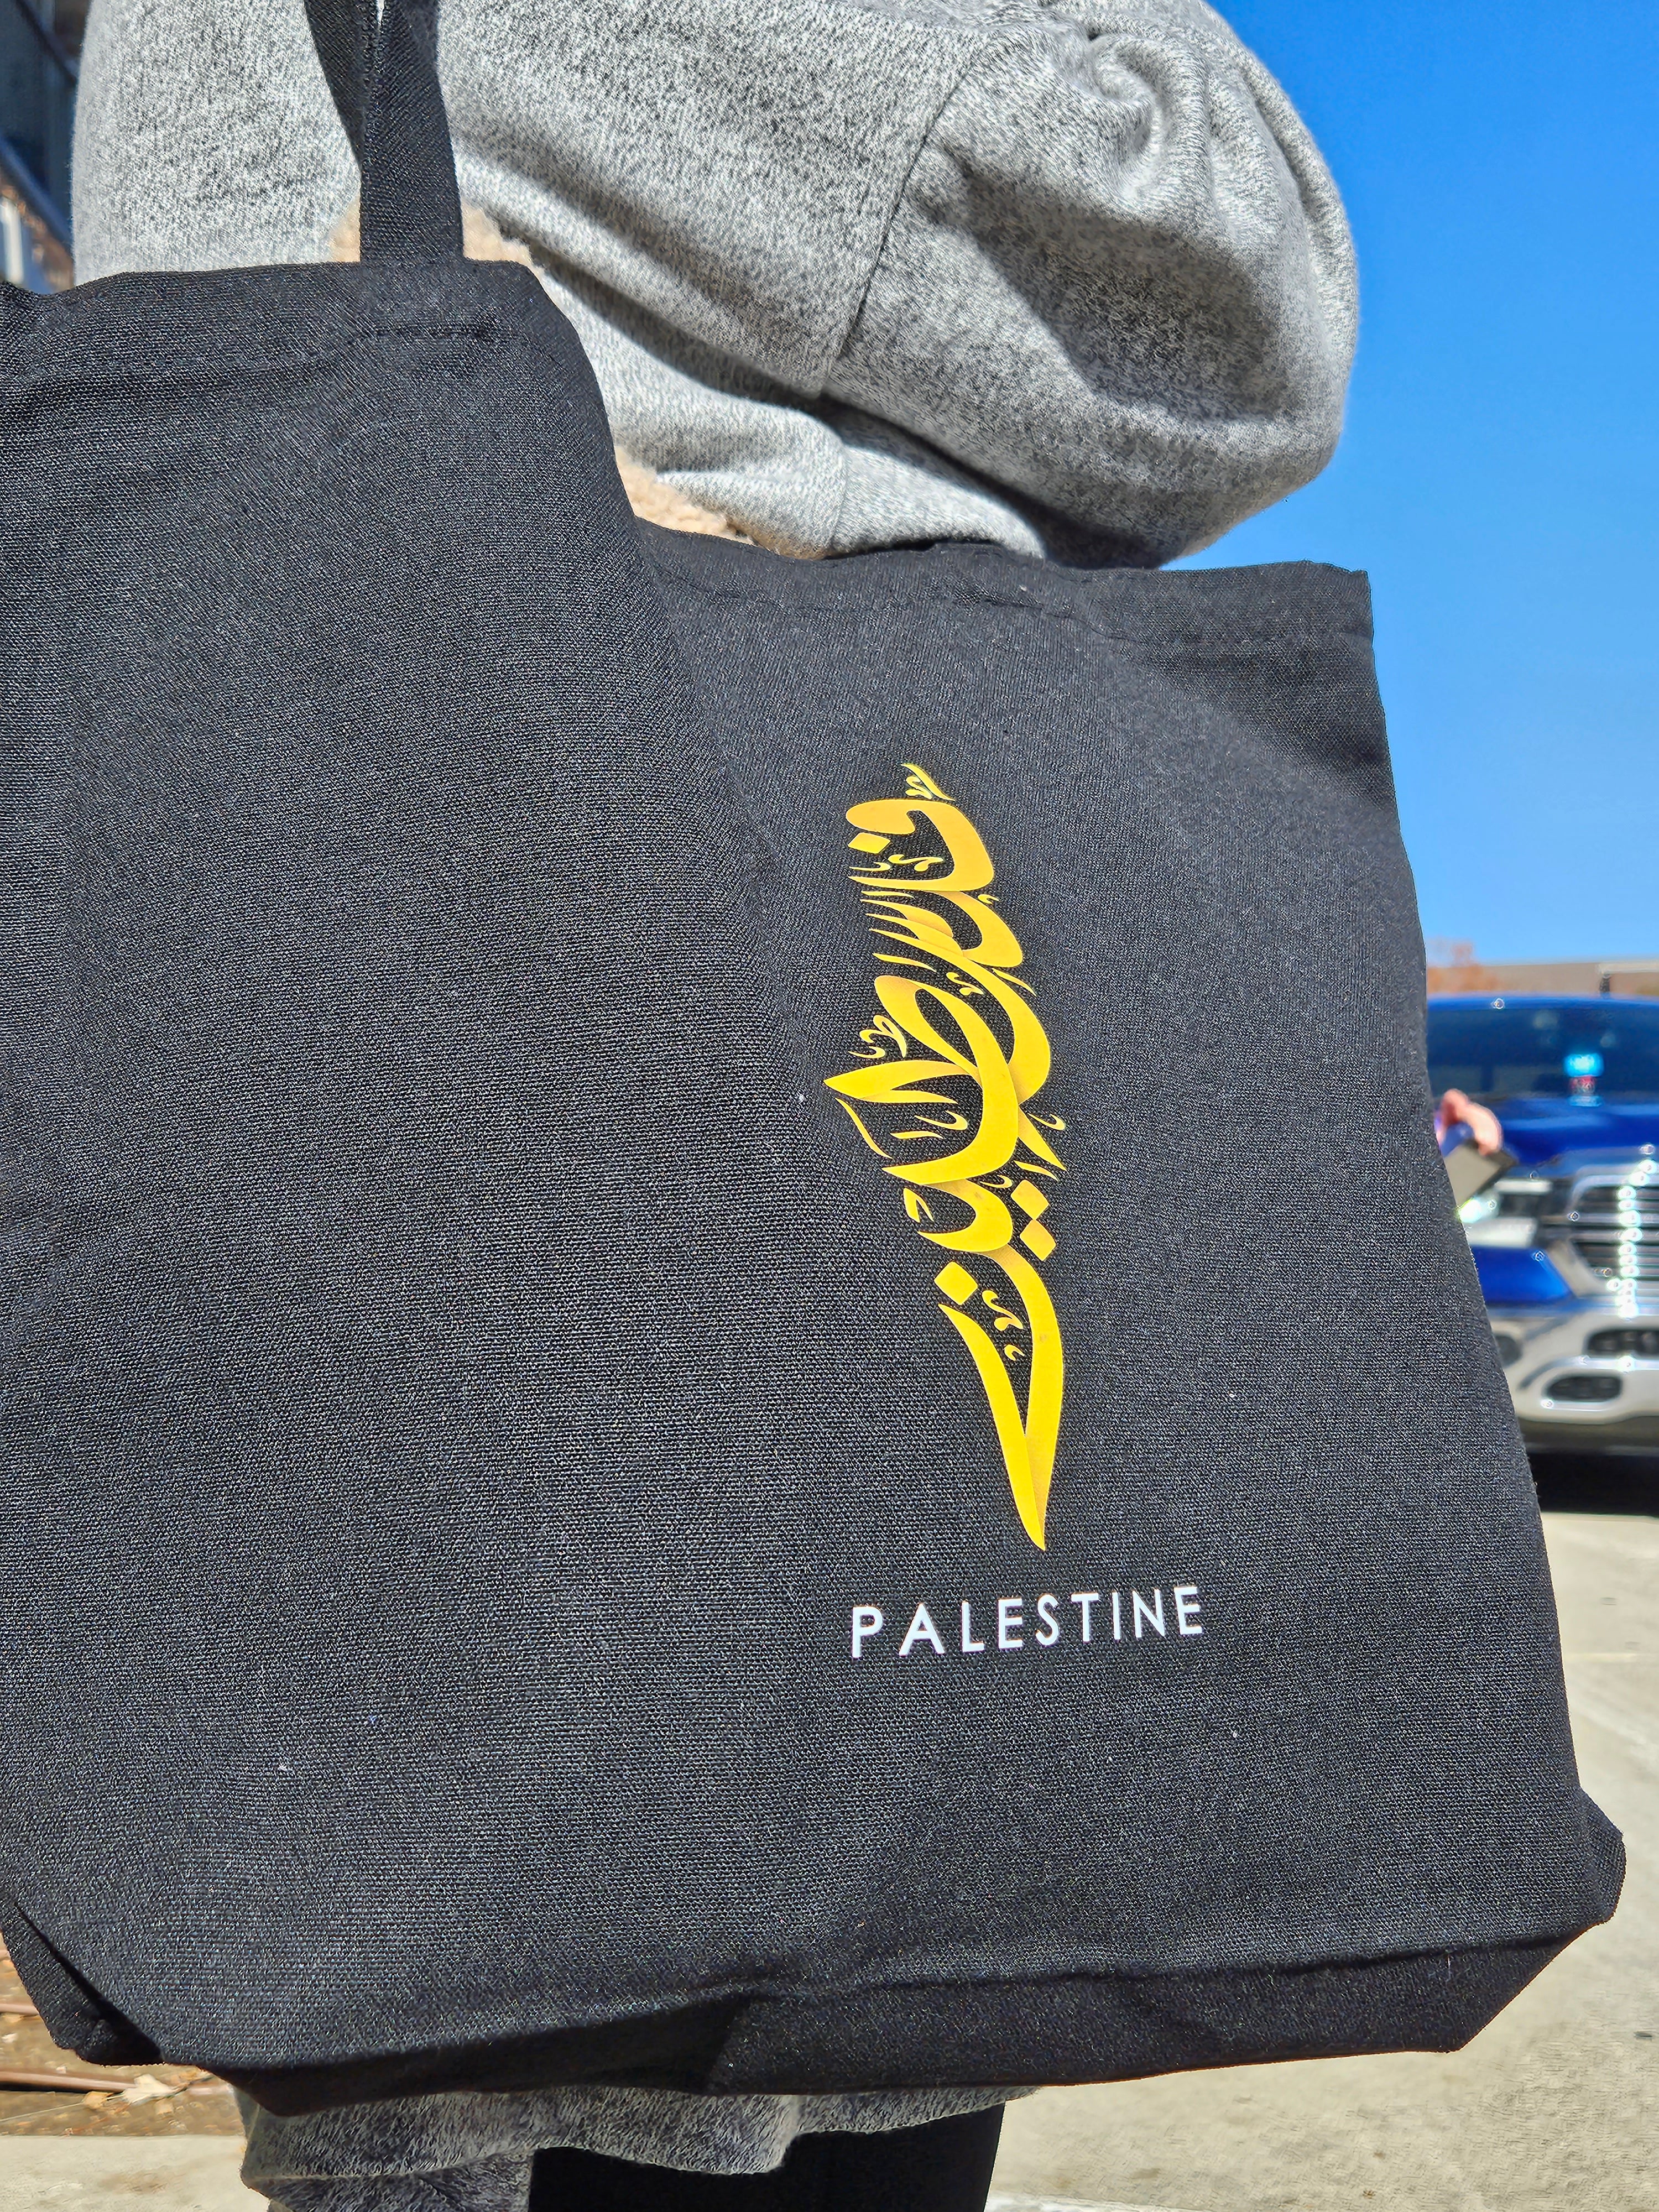 Palestine Canvas Tote Bag - Habibi Heritage